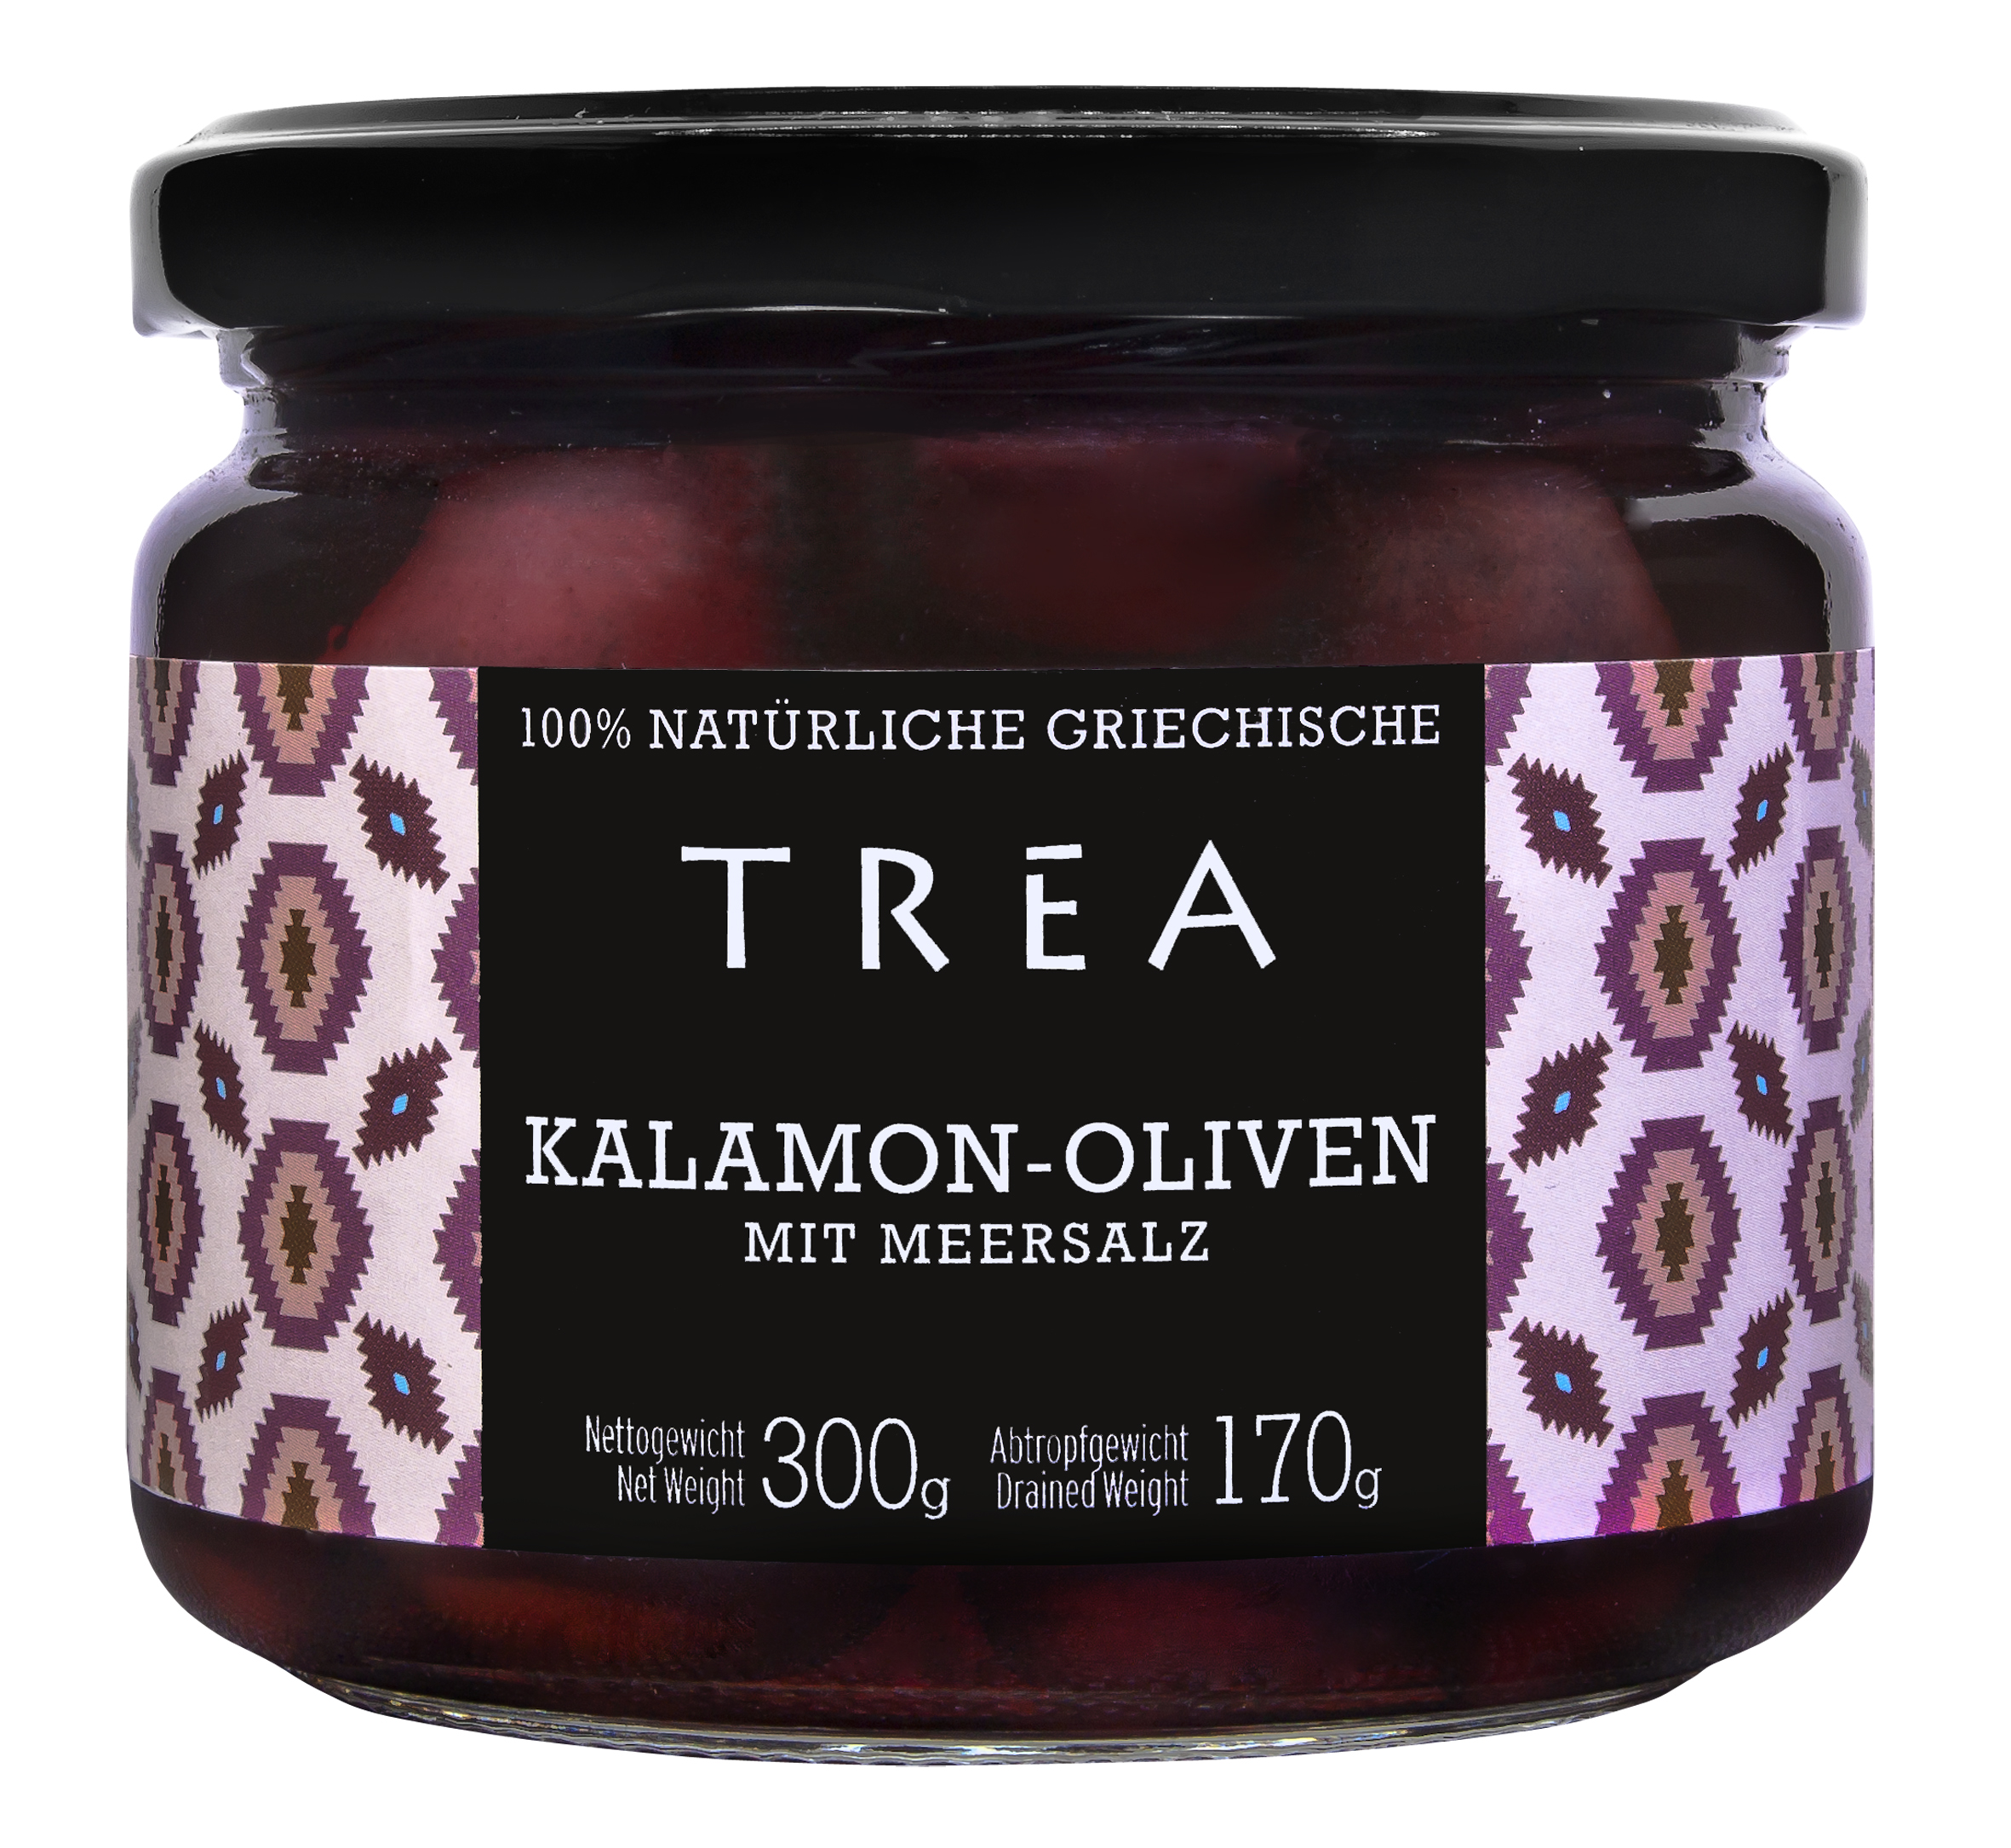 Kalamon- Oliven mit Meersalz, 300 g